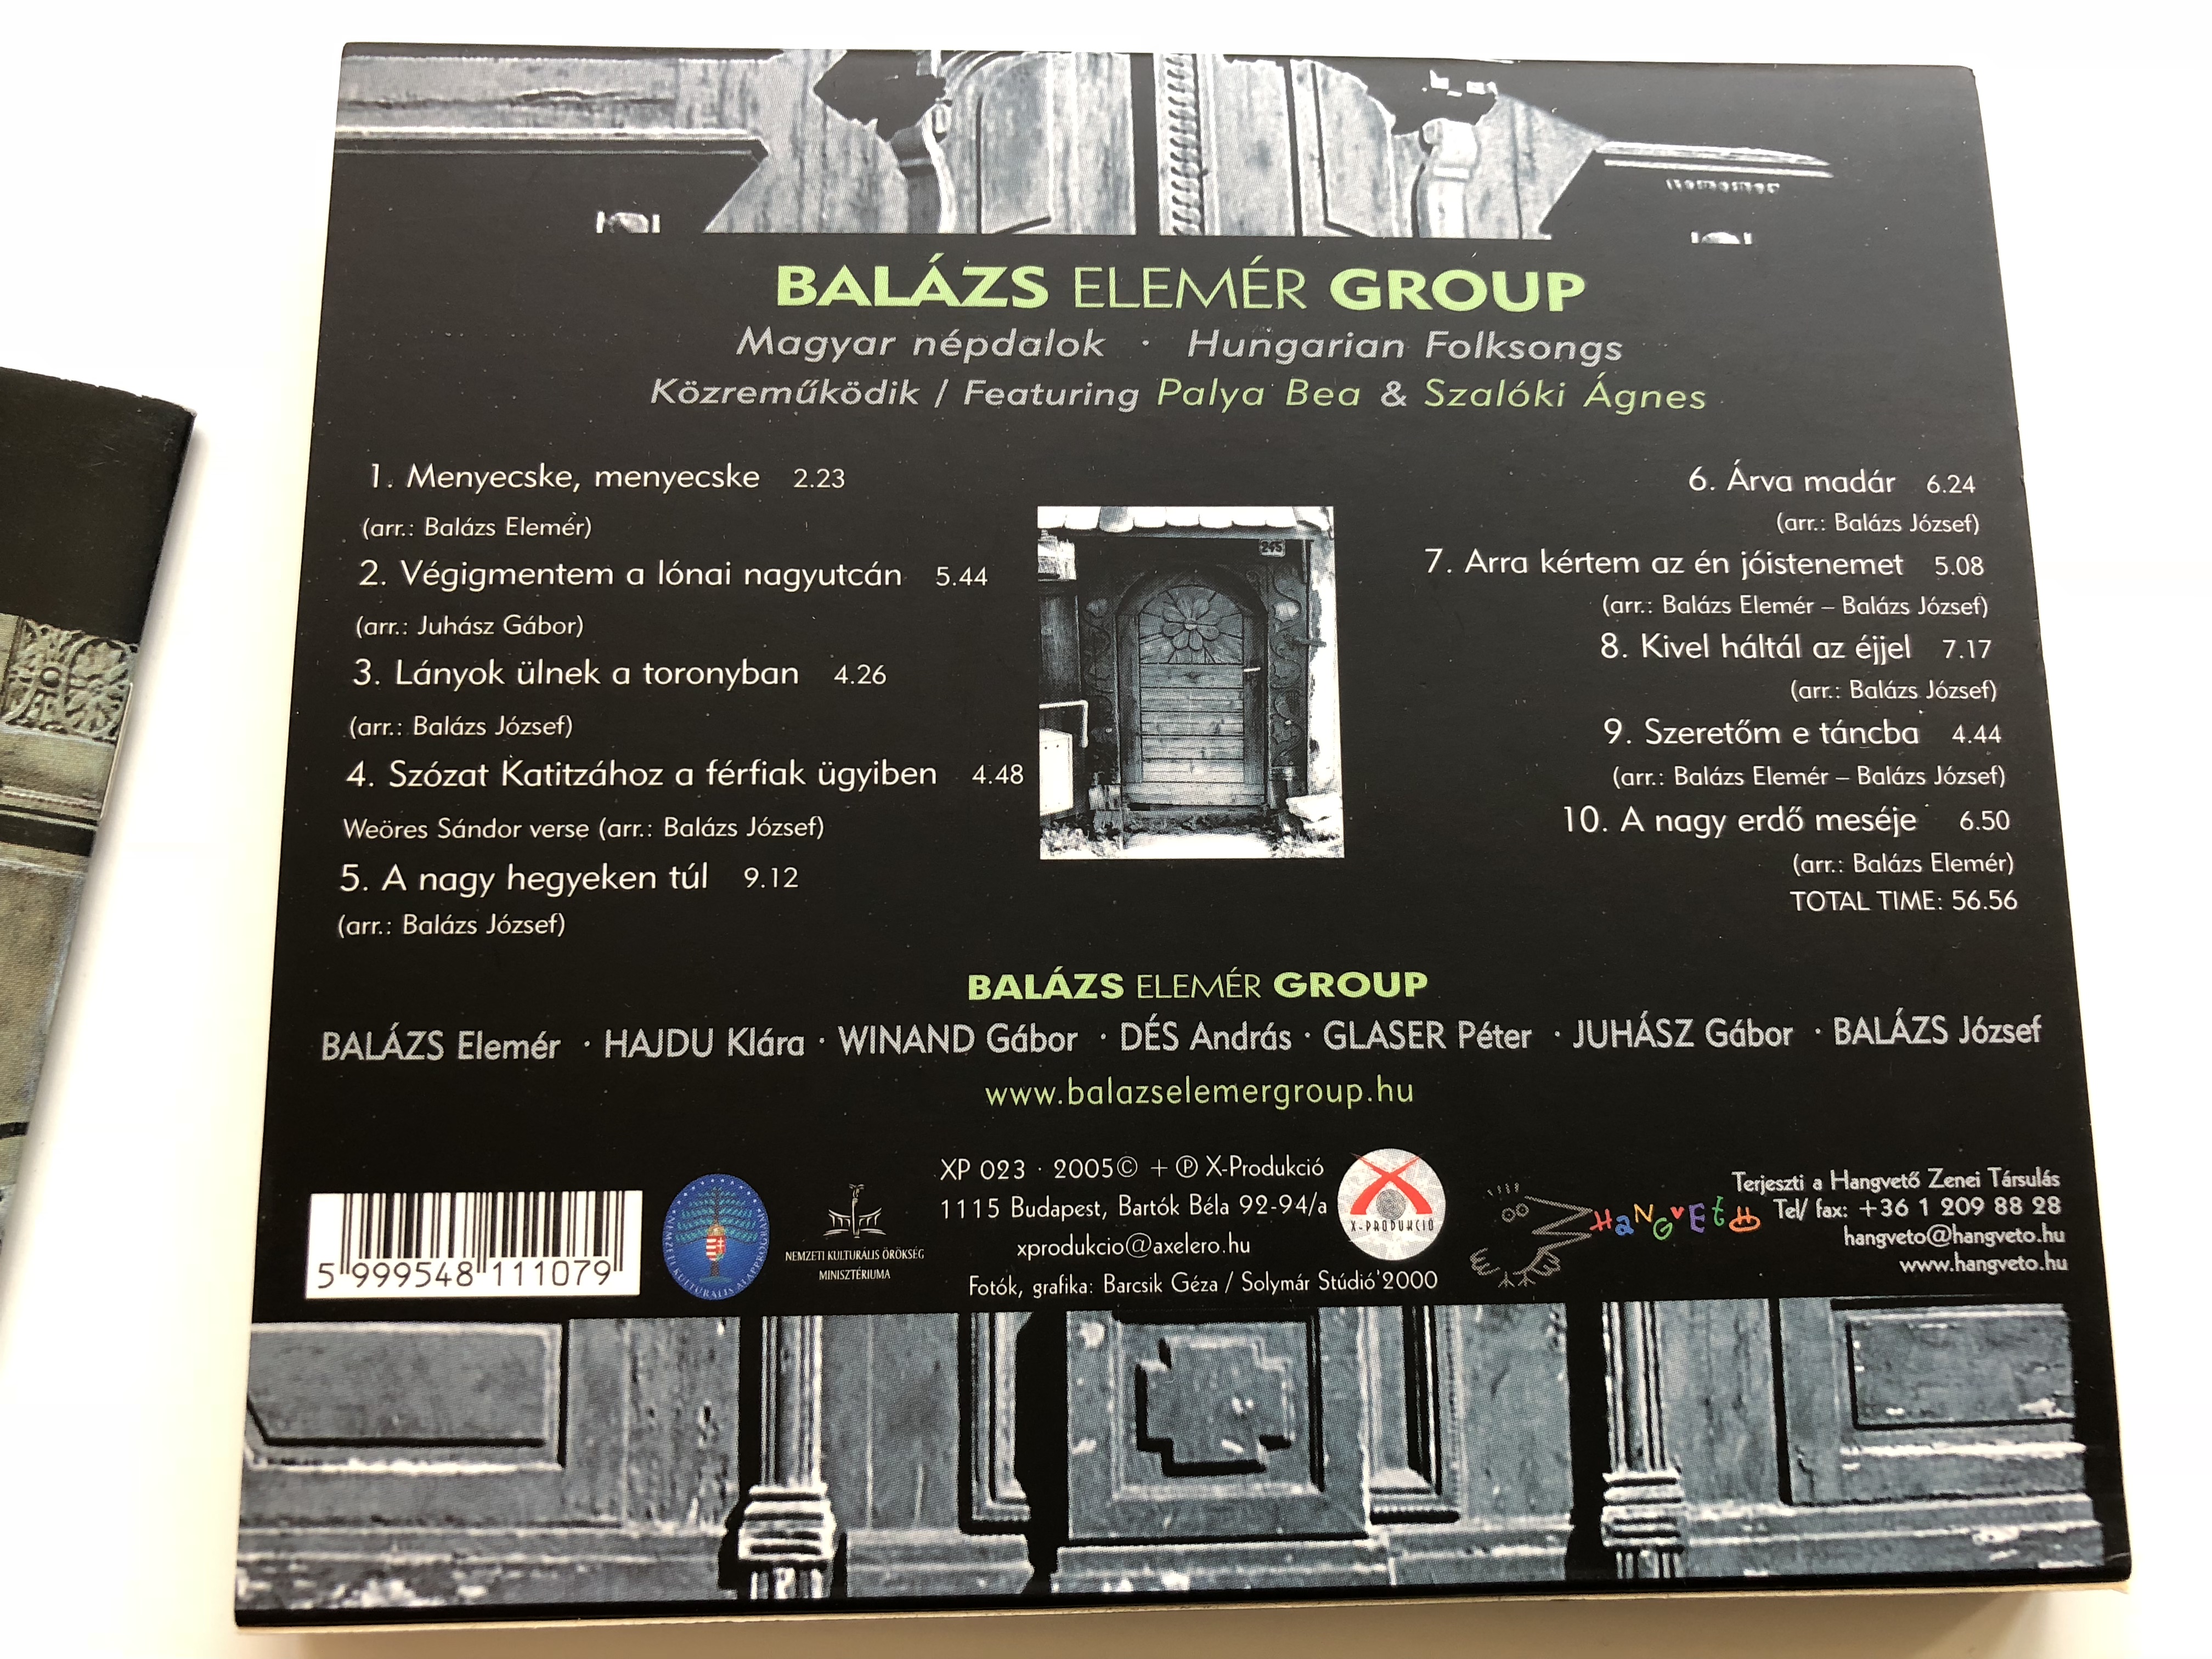 balazs-elemer-group-magyar-nepdalok-hungarian-folksong-featuring-palya-bea-szaloki-agnes-x-produkcio-audio-cd-2005-xp-023-7-.jpg